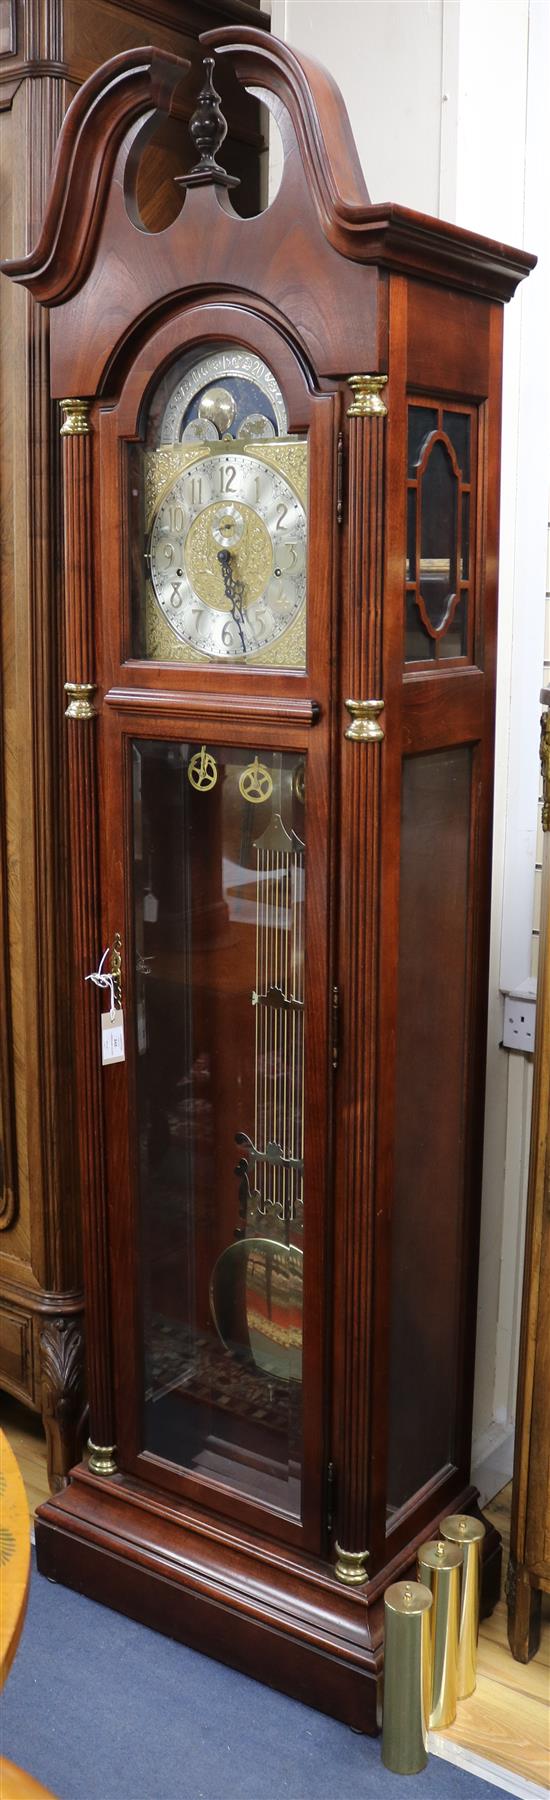 A Howard Miller Westminster chiming longcase clock